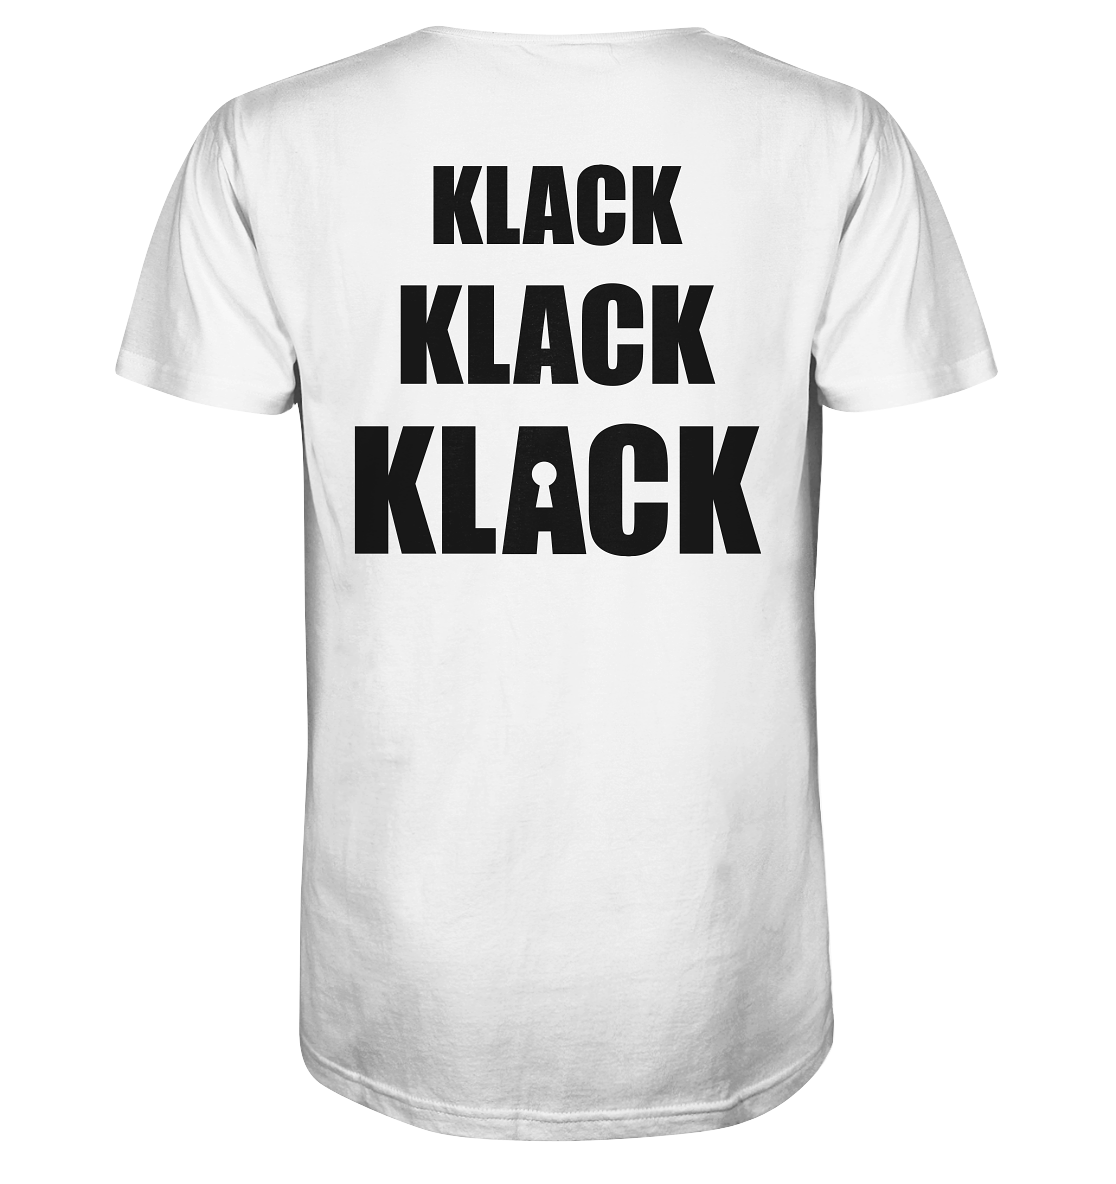 Klack - Organic Shirt